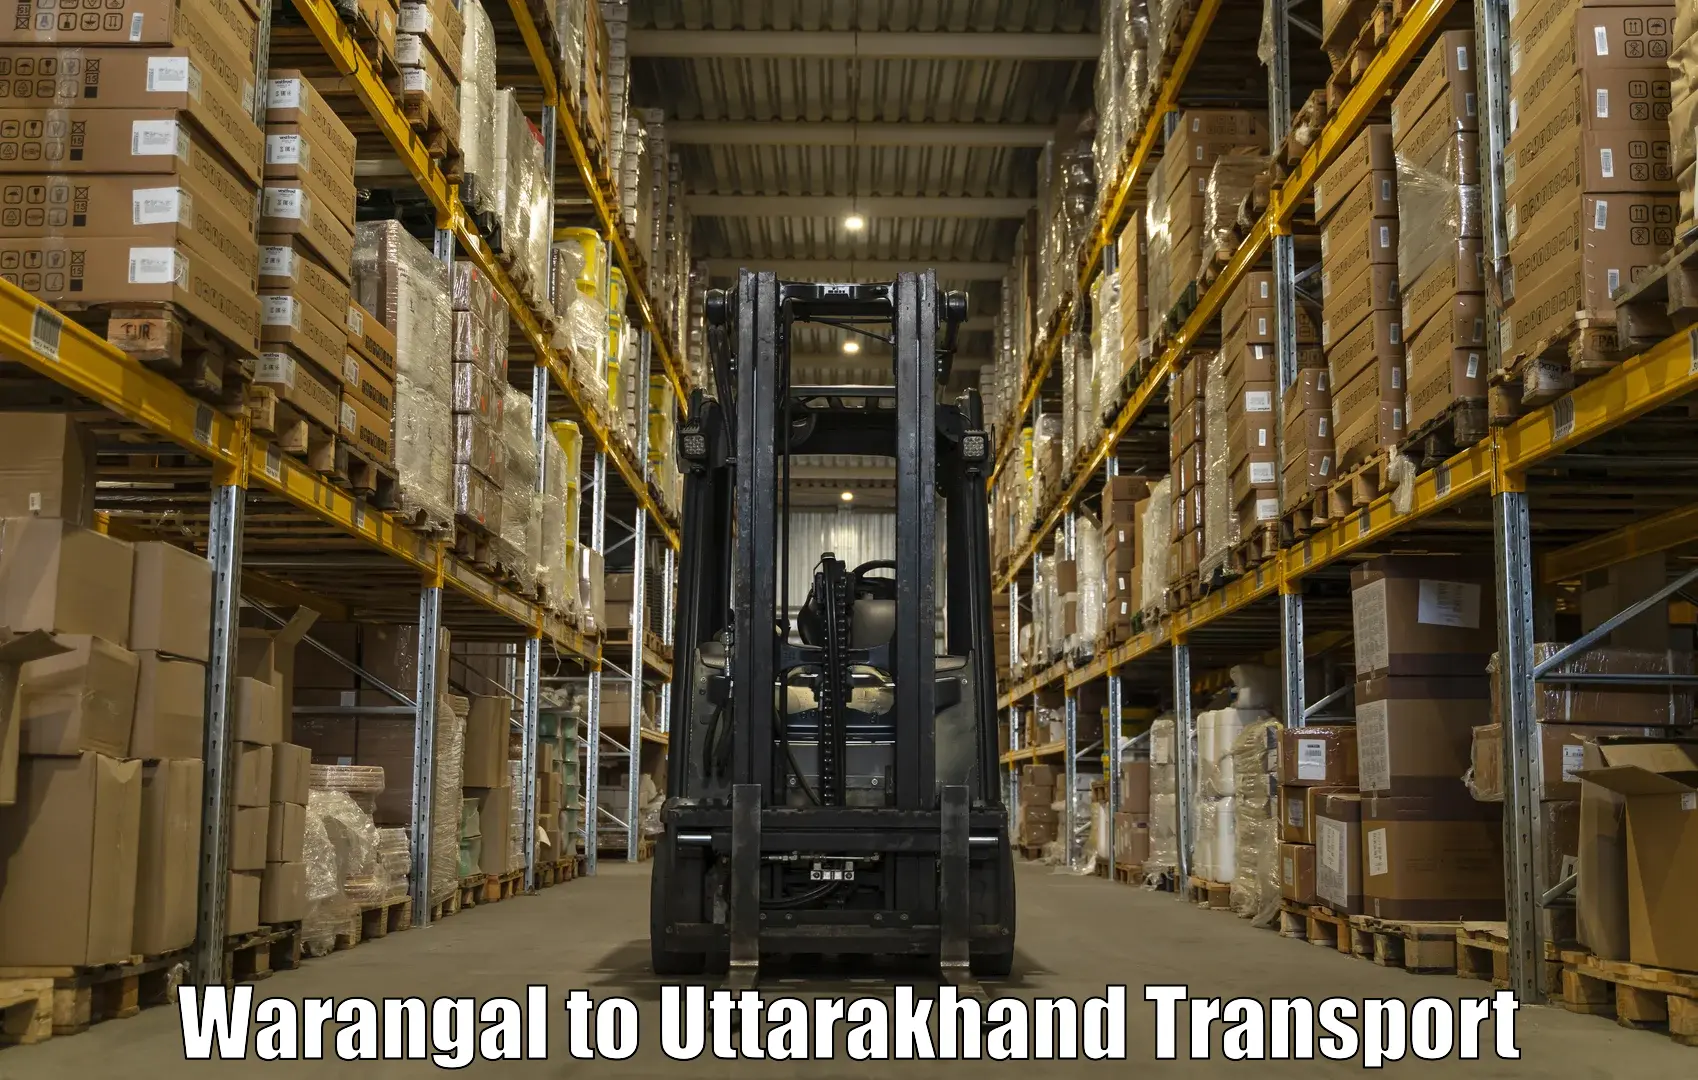 Truck transport companies in India Warangal to Karnaprayag